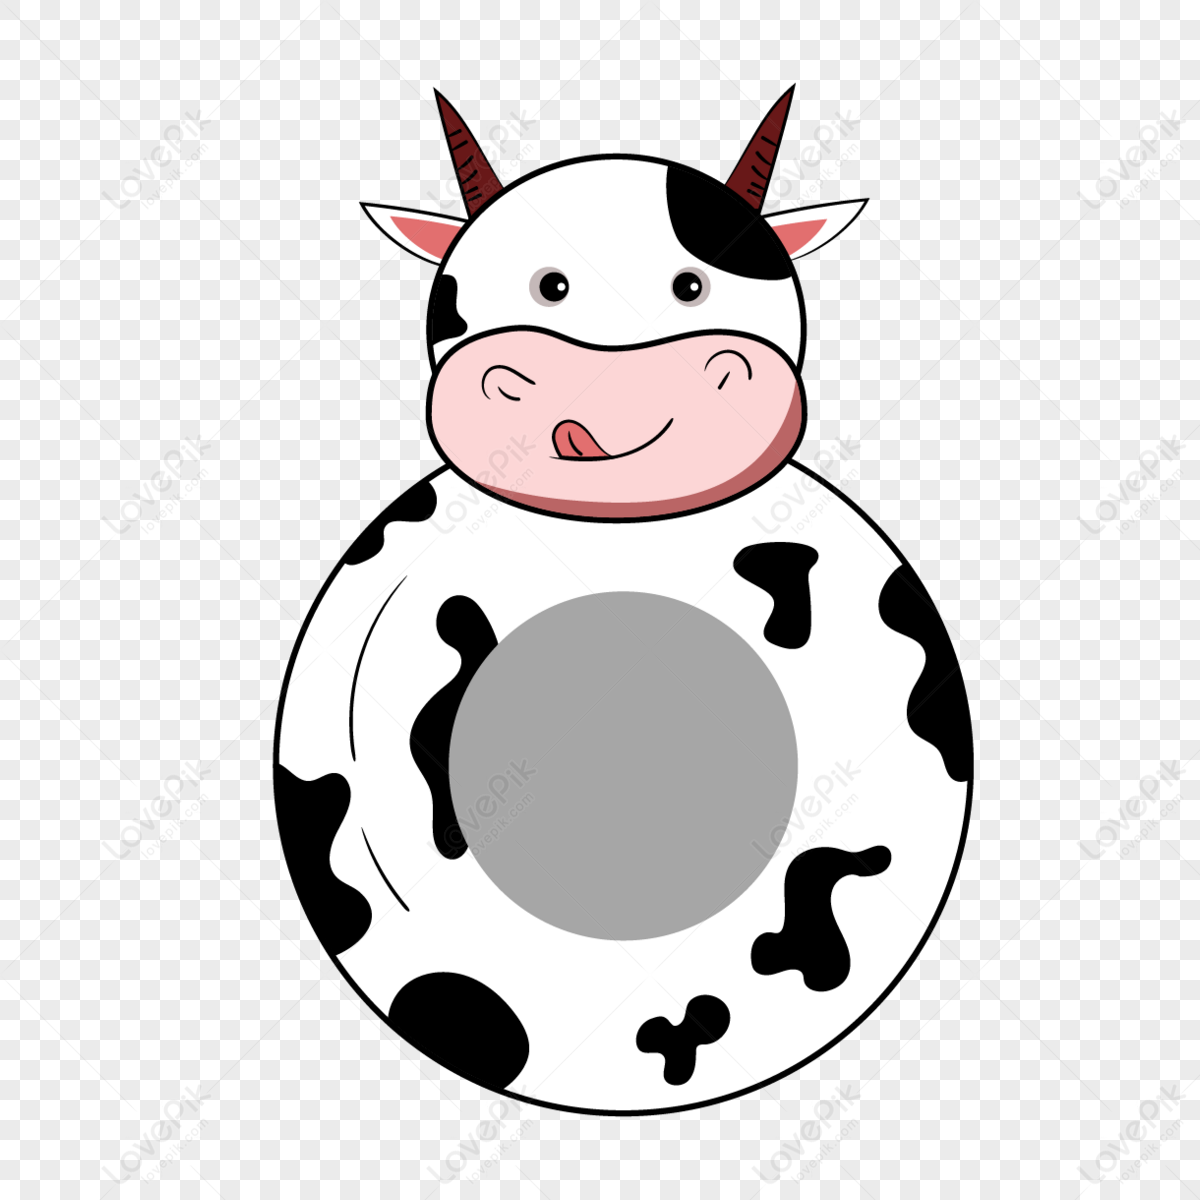 Drew a cute cow havin' a good sit. : r/drawing